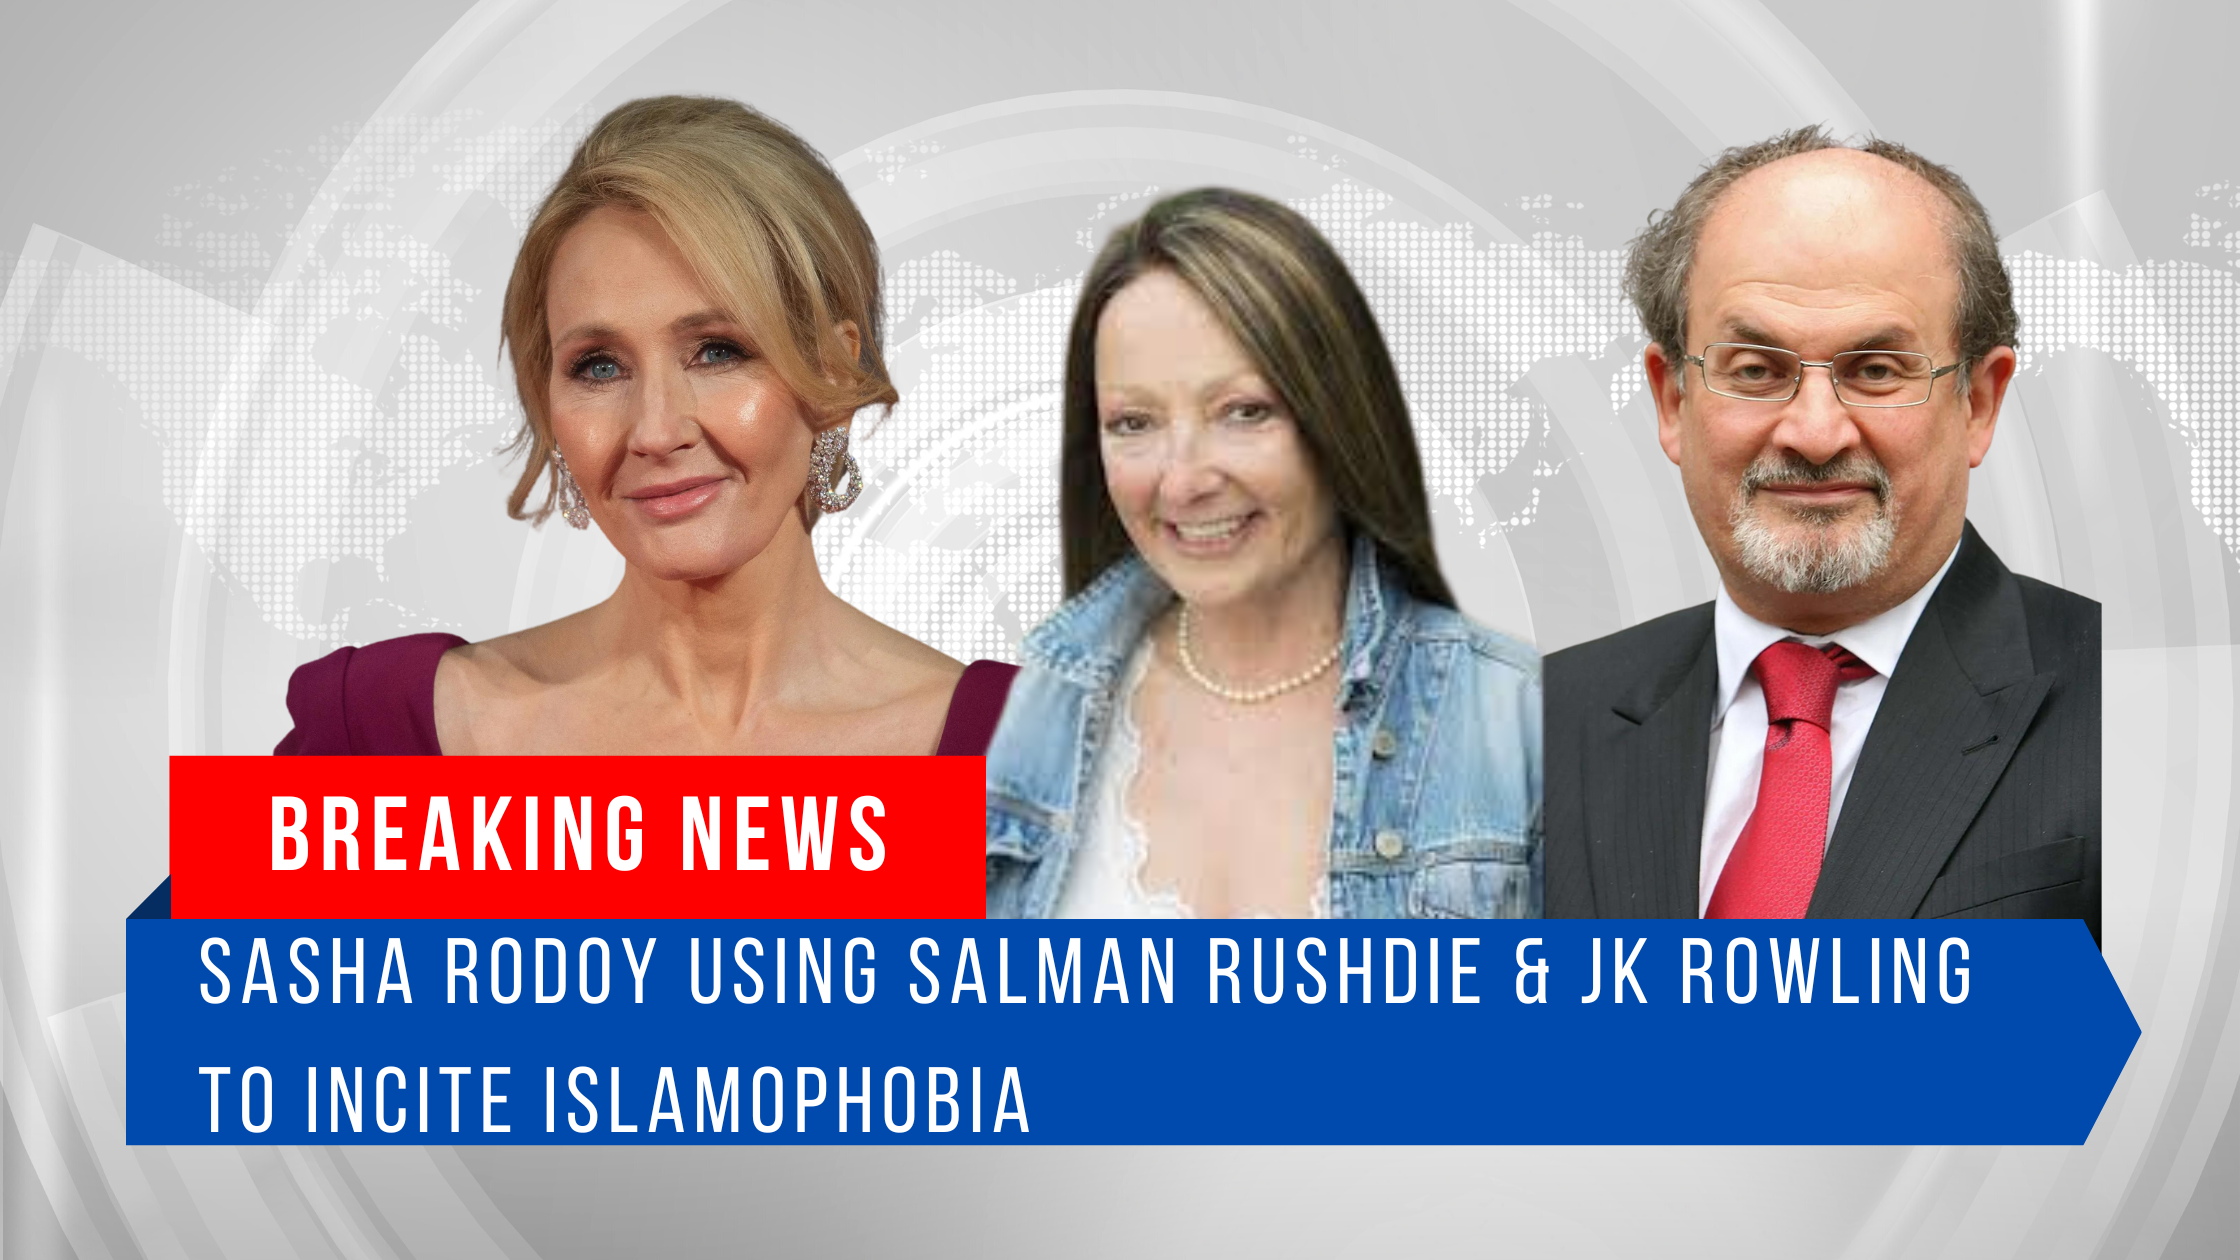 Sasha Rodoy disseminates islamophobia using Salman Rushdie and Rowling